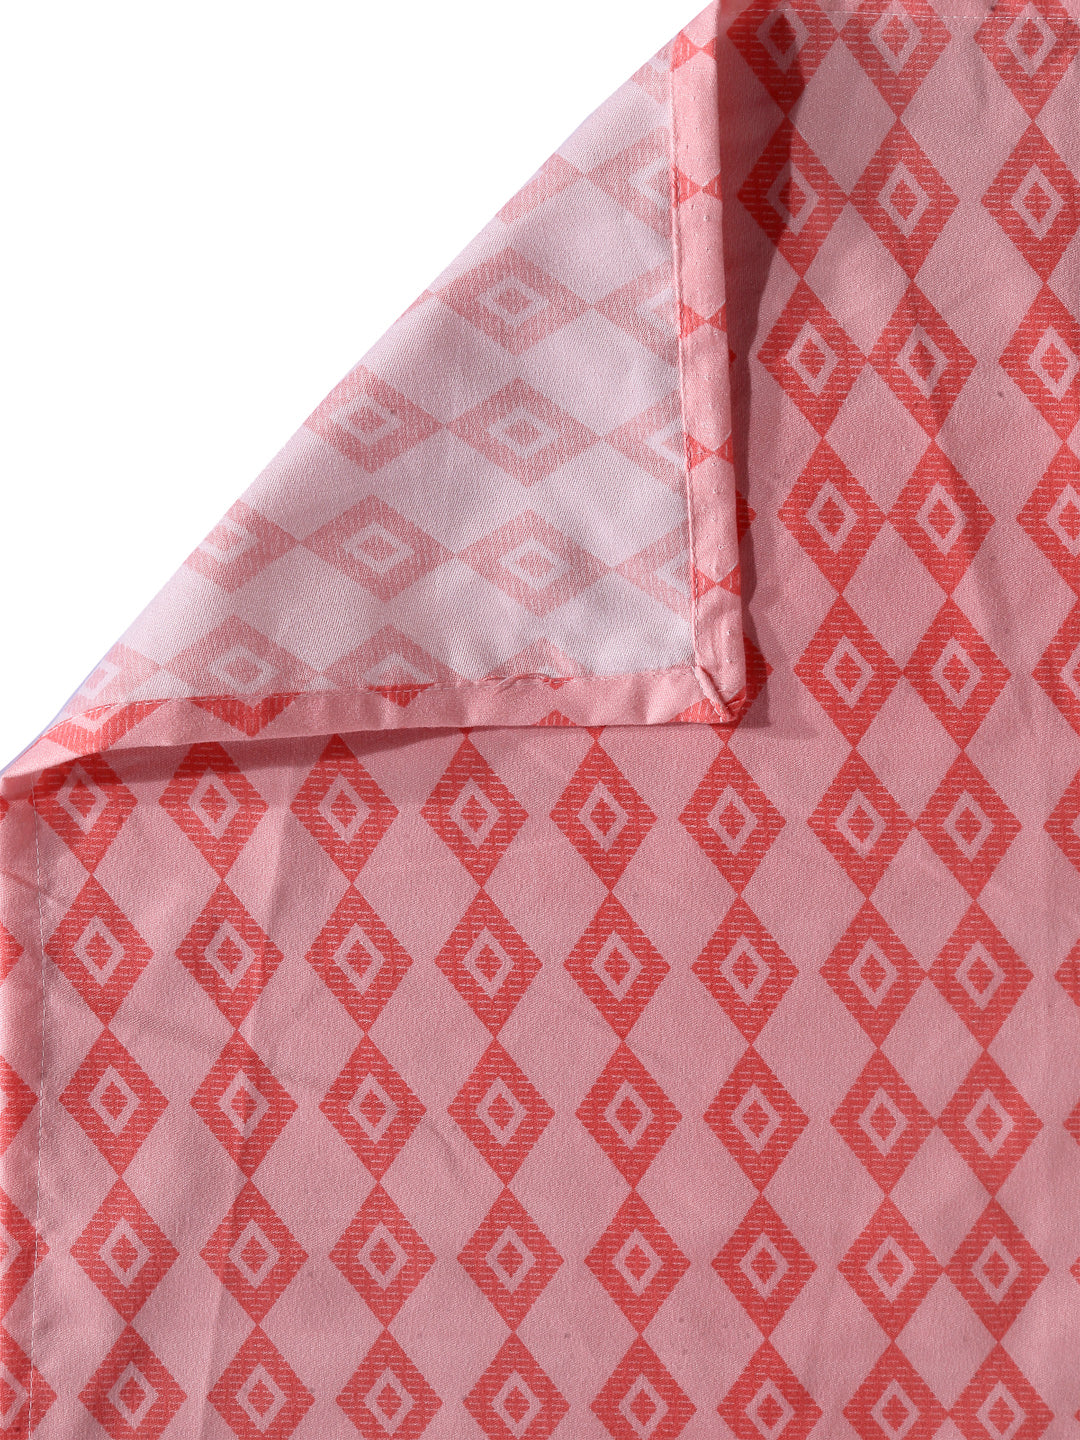 Arrabi Orange Geometric Cotton Blend 8 SEATER Table Cover (225 X 150 cm)